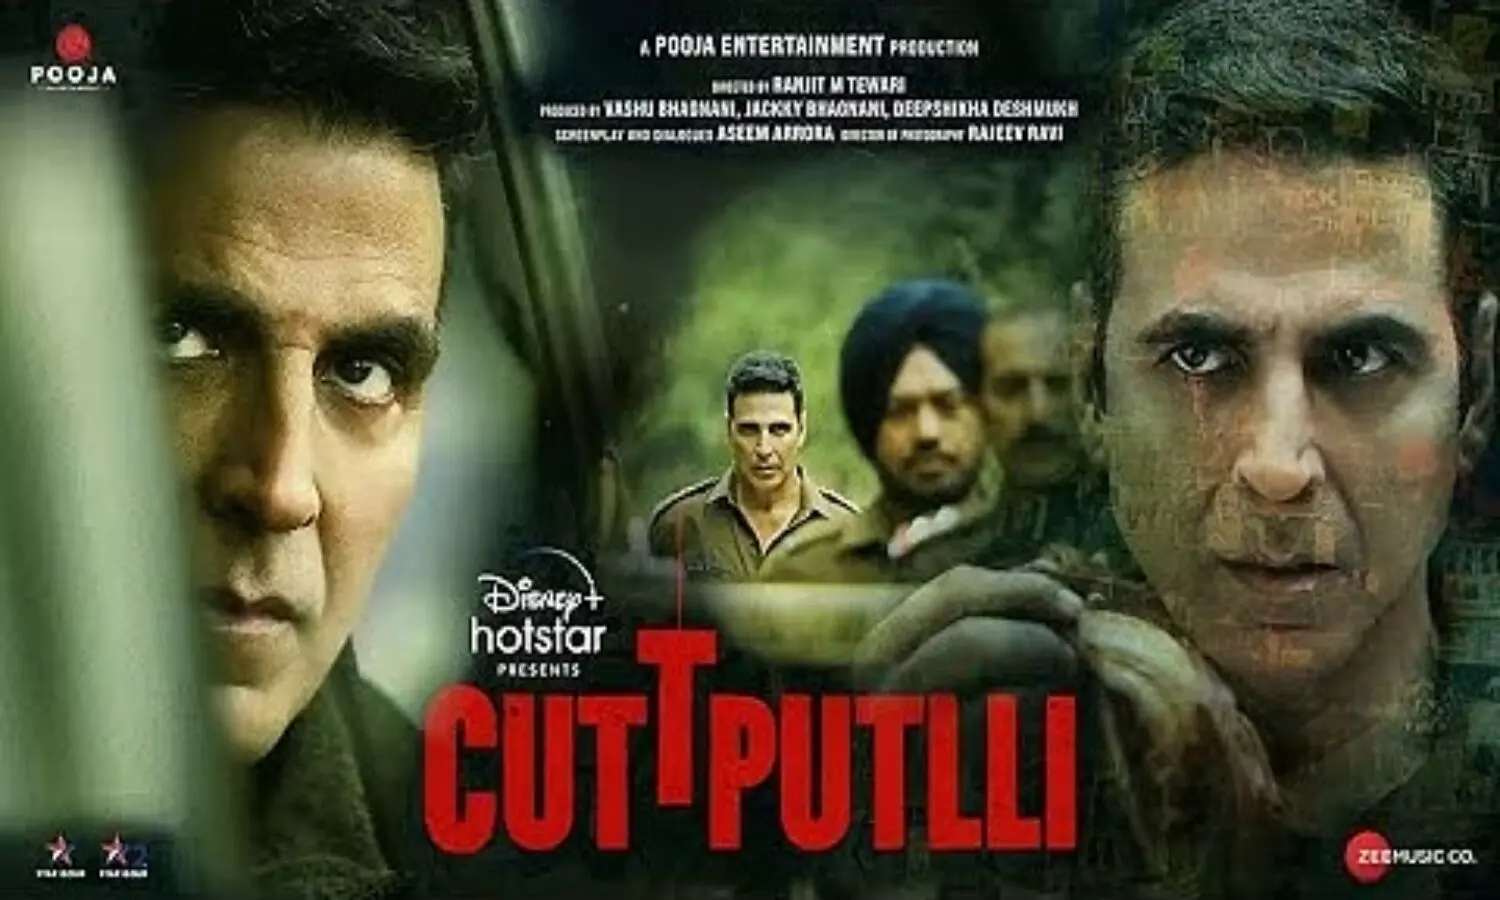 Cuttputlli Trailer